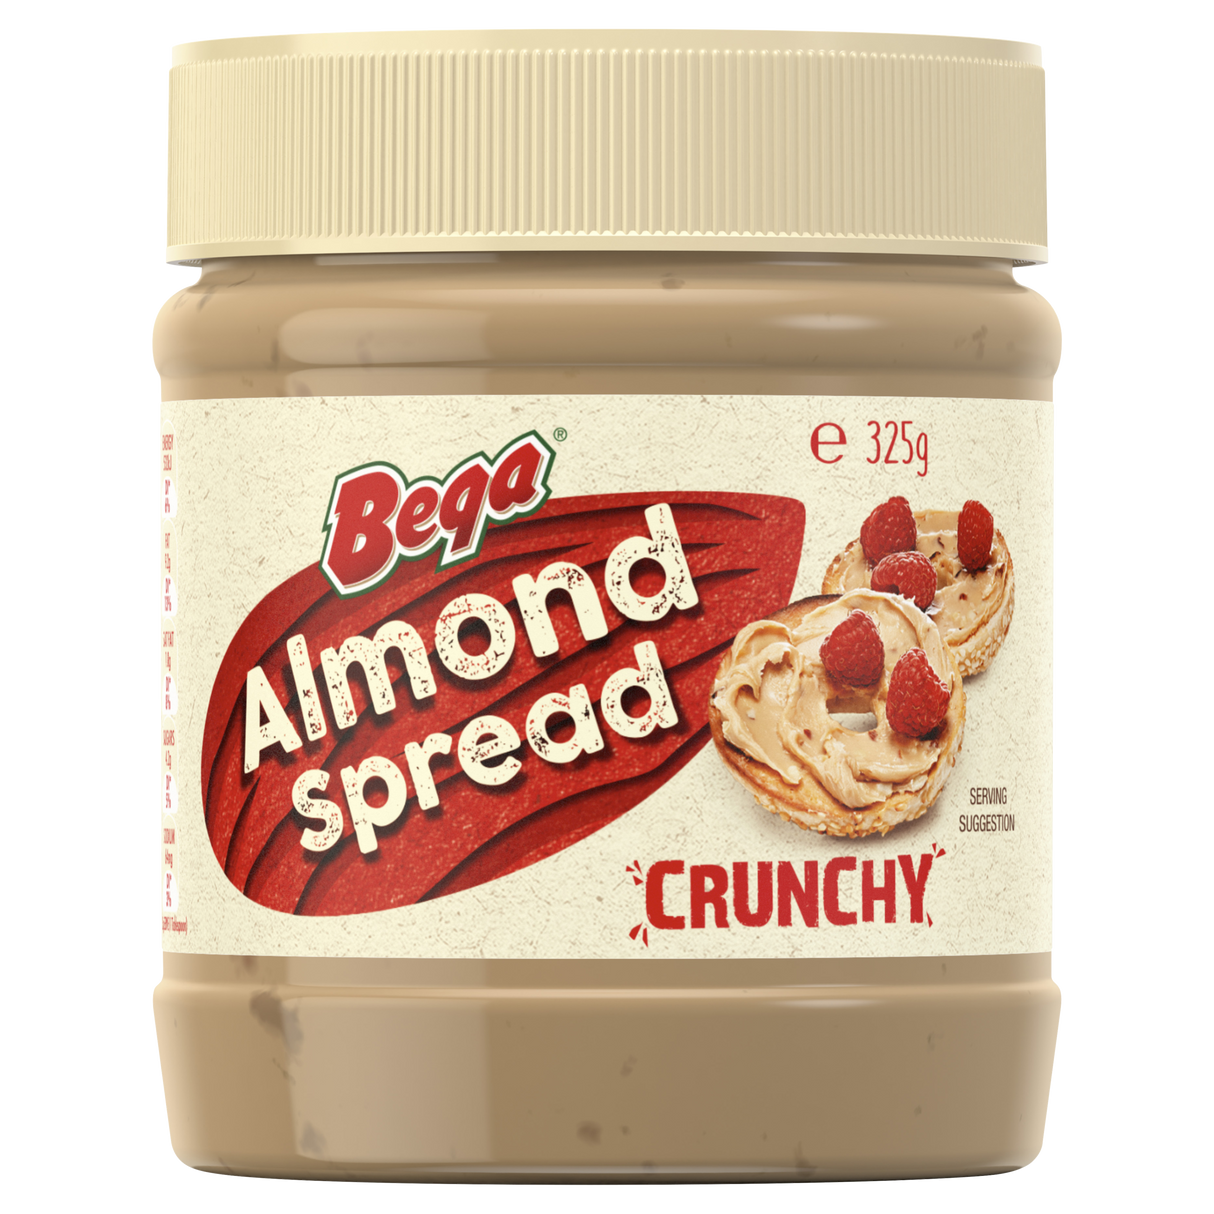 Bega Almond Spread Crunchy 325g